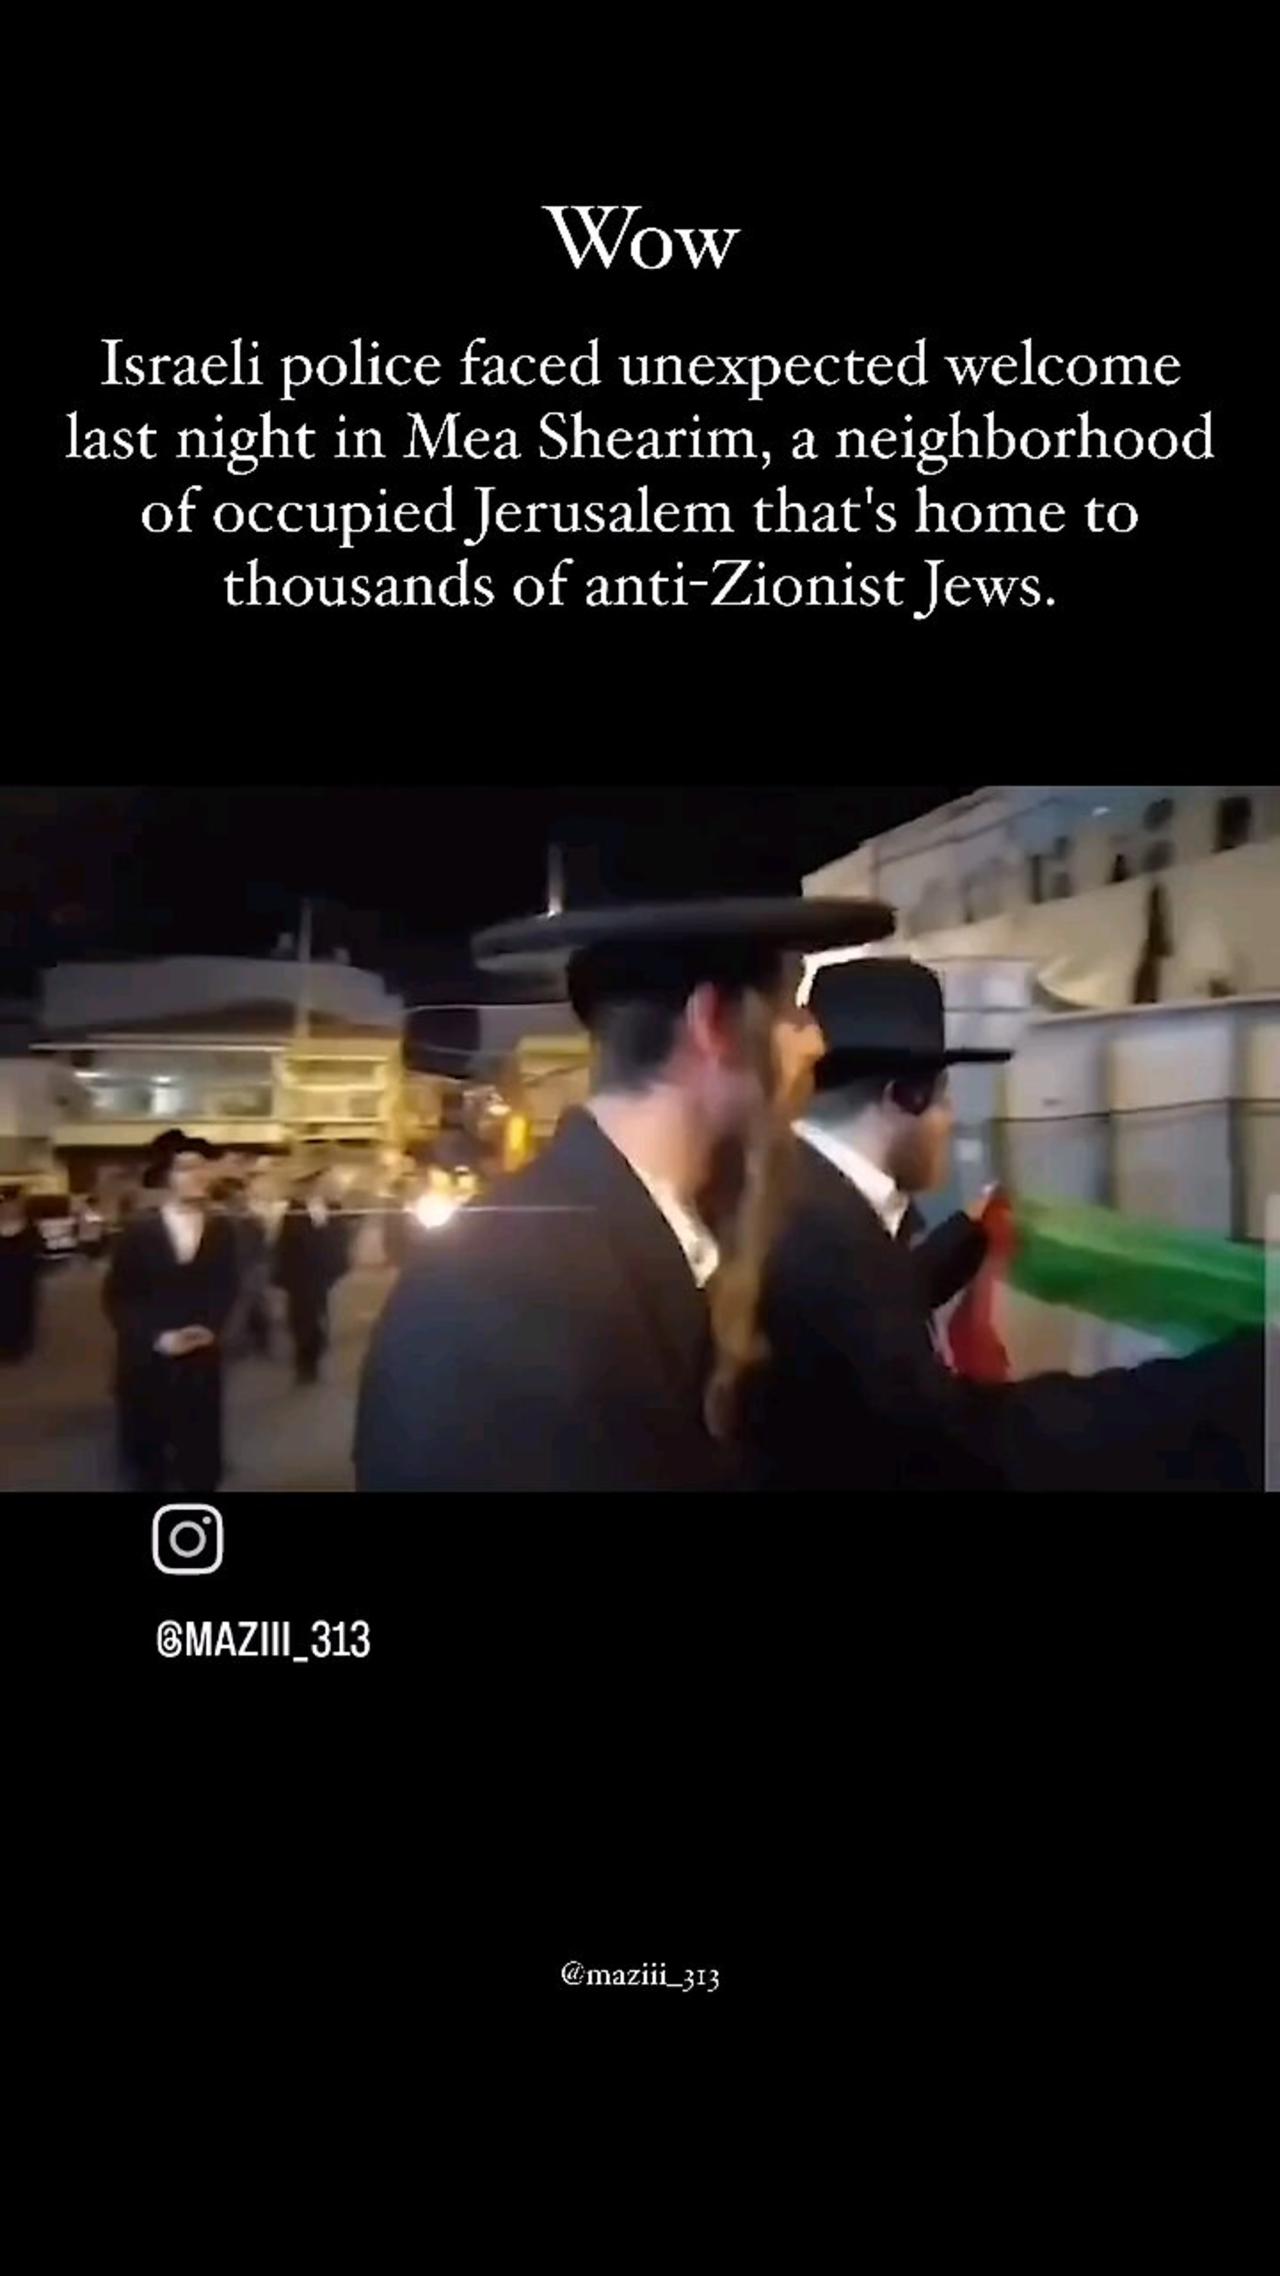 anti zionist jews of Jerusalem say Free Palestine